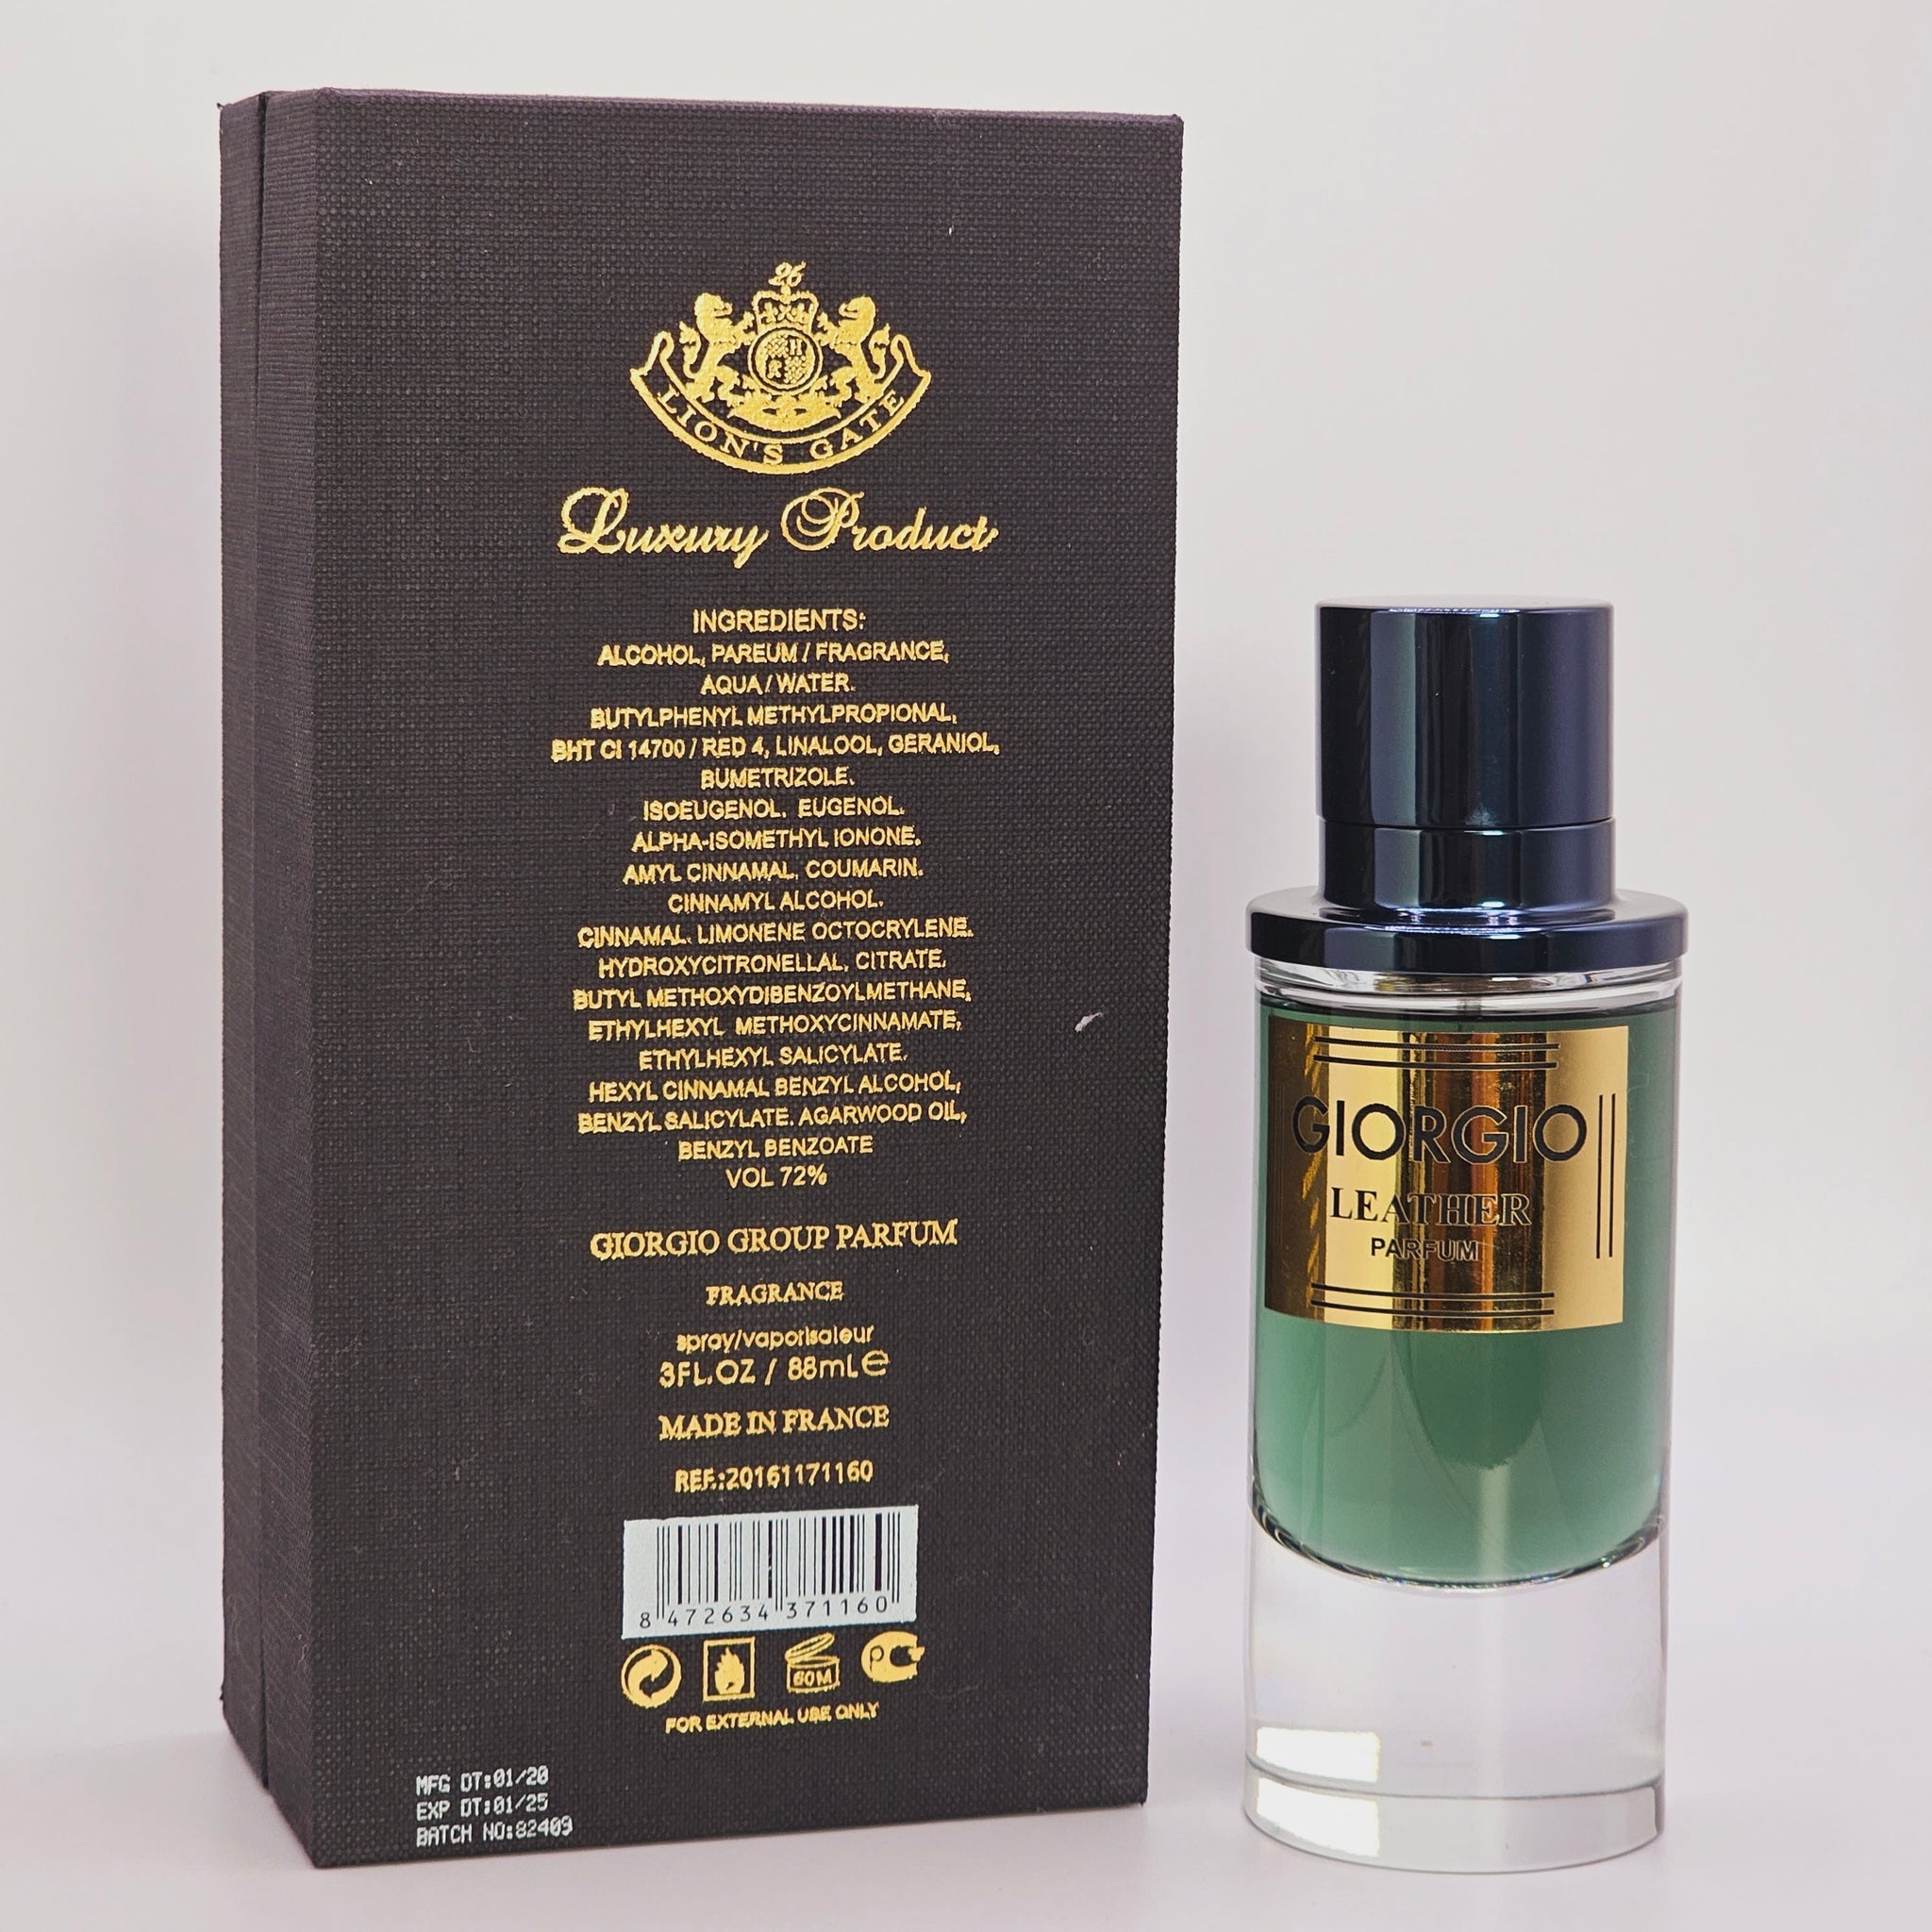 Giorgio Leather Parfum Luxury Product By Giorgio Group 3 Oz Unisex